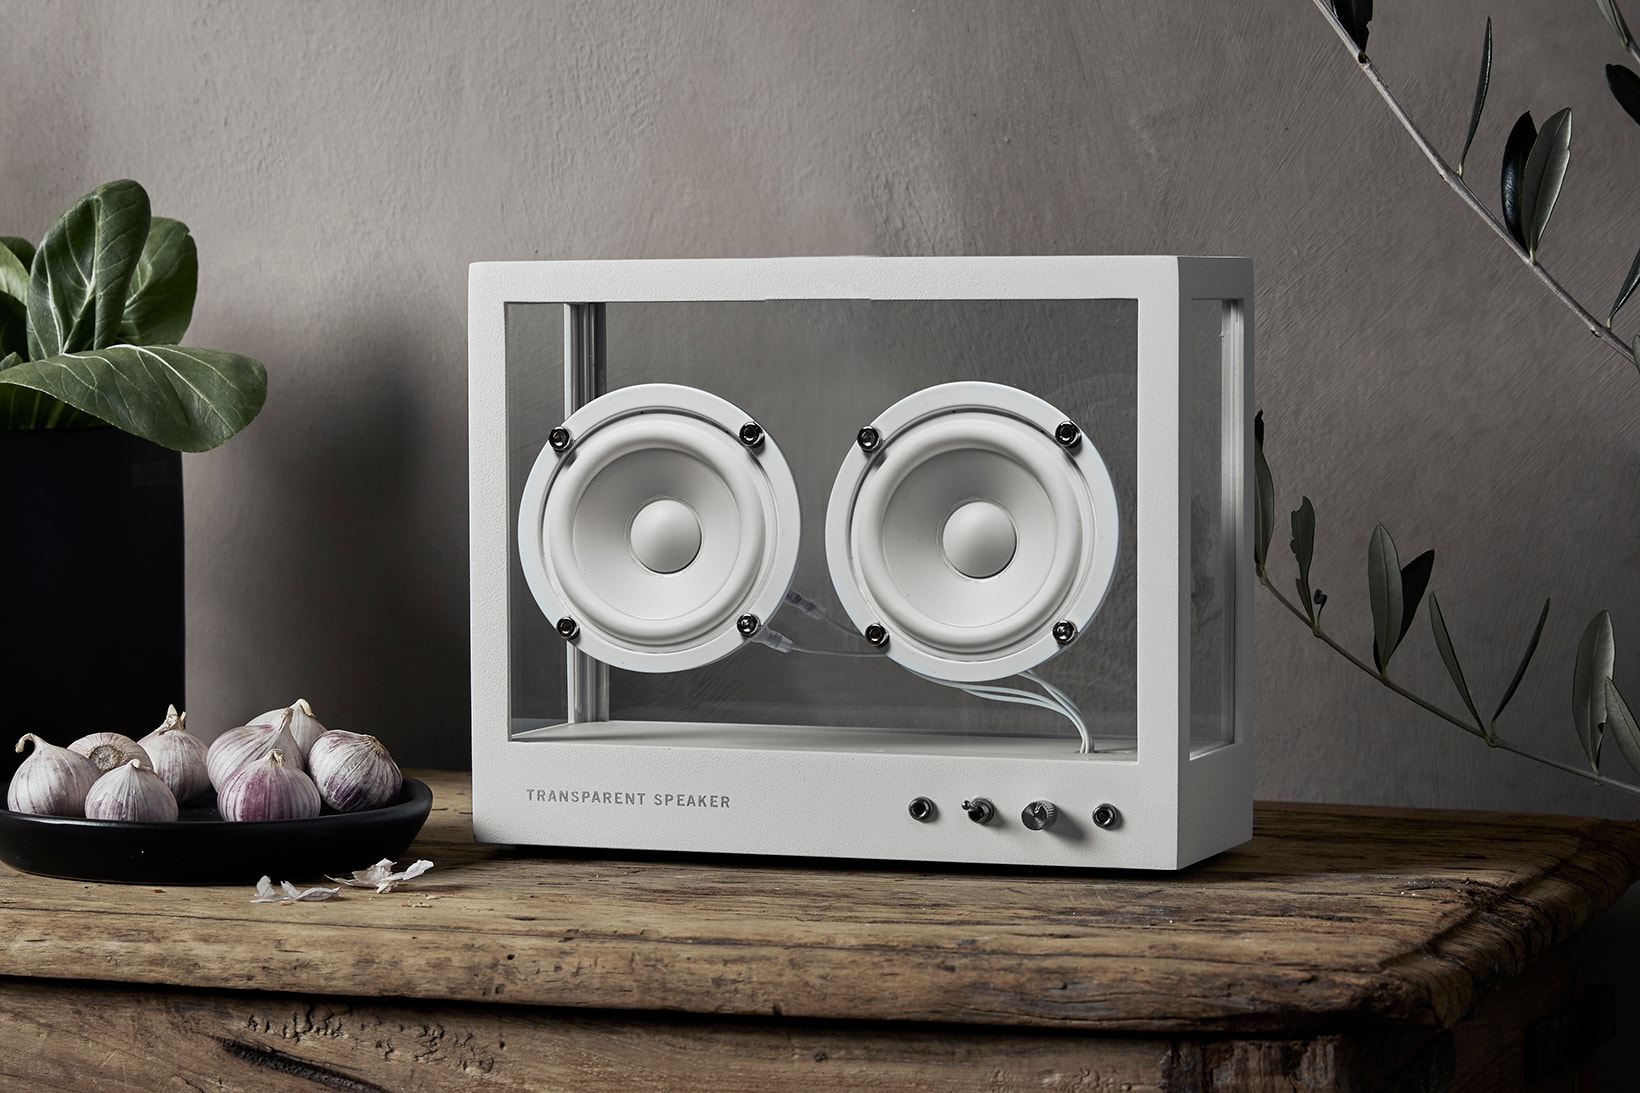 Transparent Sound See Through Glass Speakers Home Audio Scandinavia Minimal Sweden Stockholm Design Interiors Homeware Tech